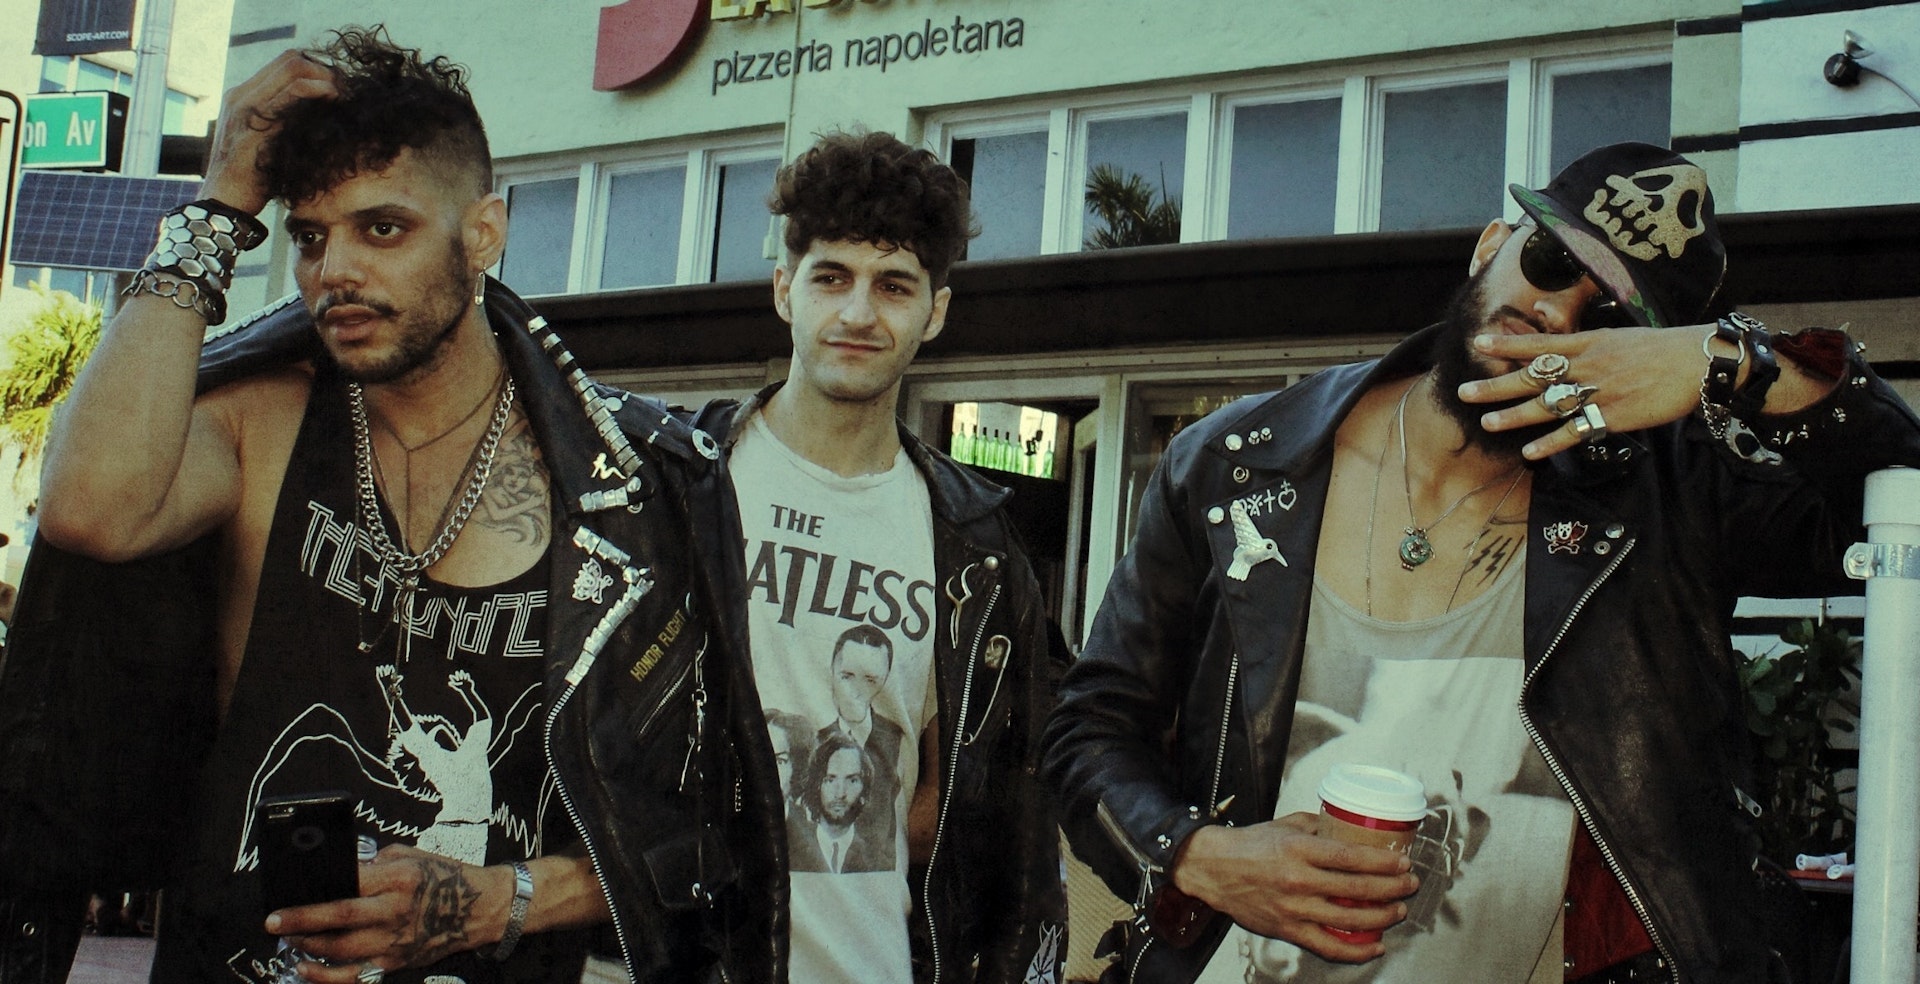 DAMEHT: The punks keeping NYC’s rebellious spirit alive